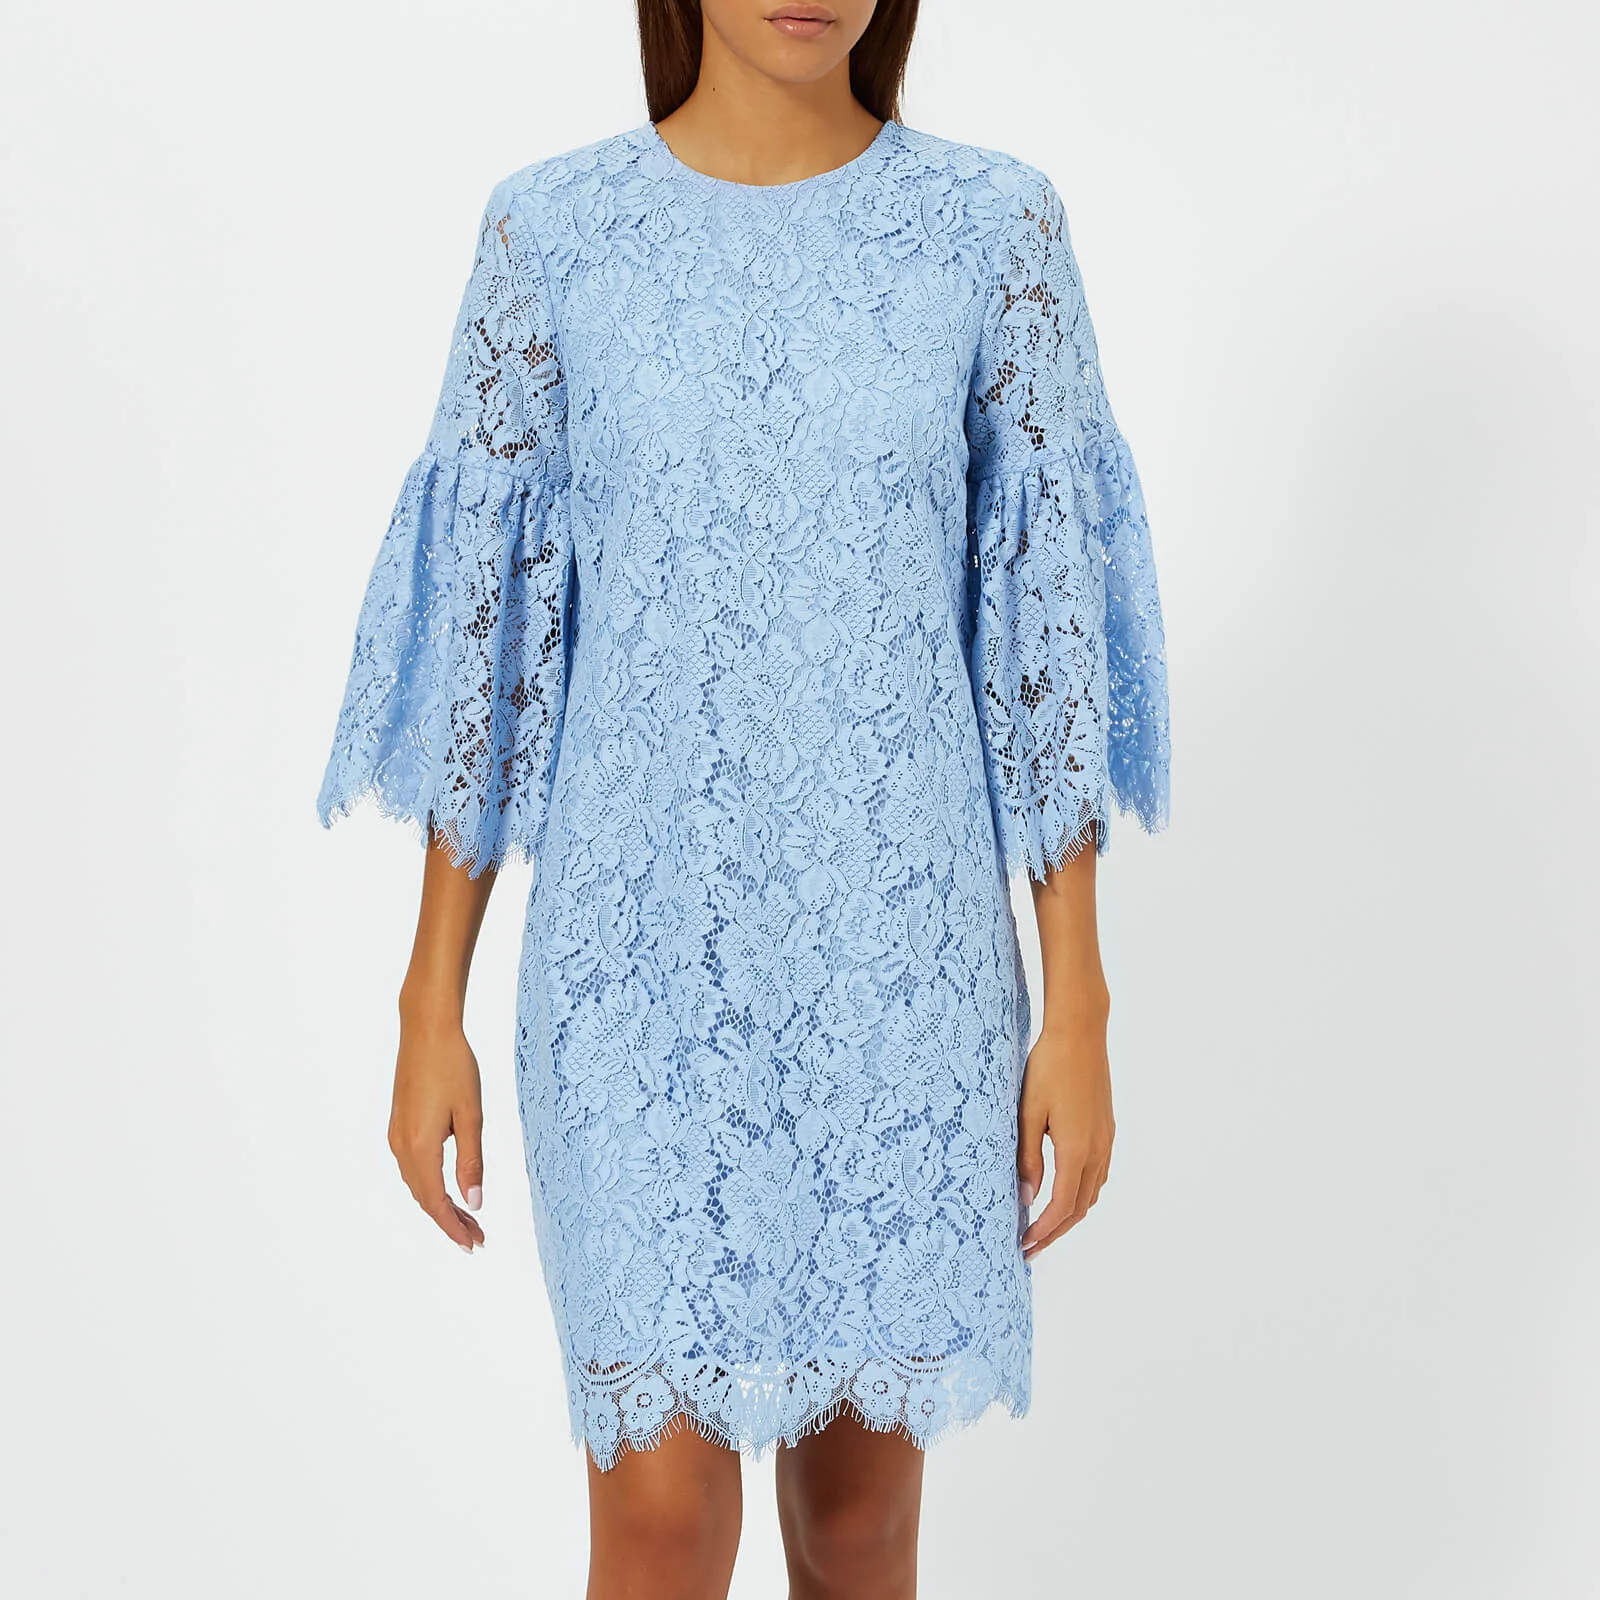 Ganni Women's Jerome Lace Dress - Serenity Blue Image 1